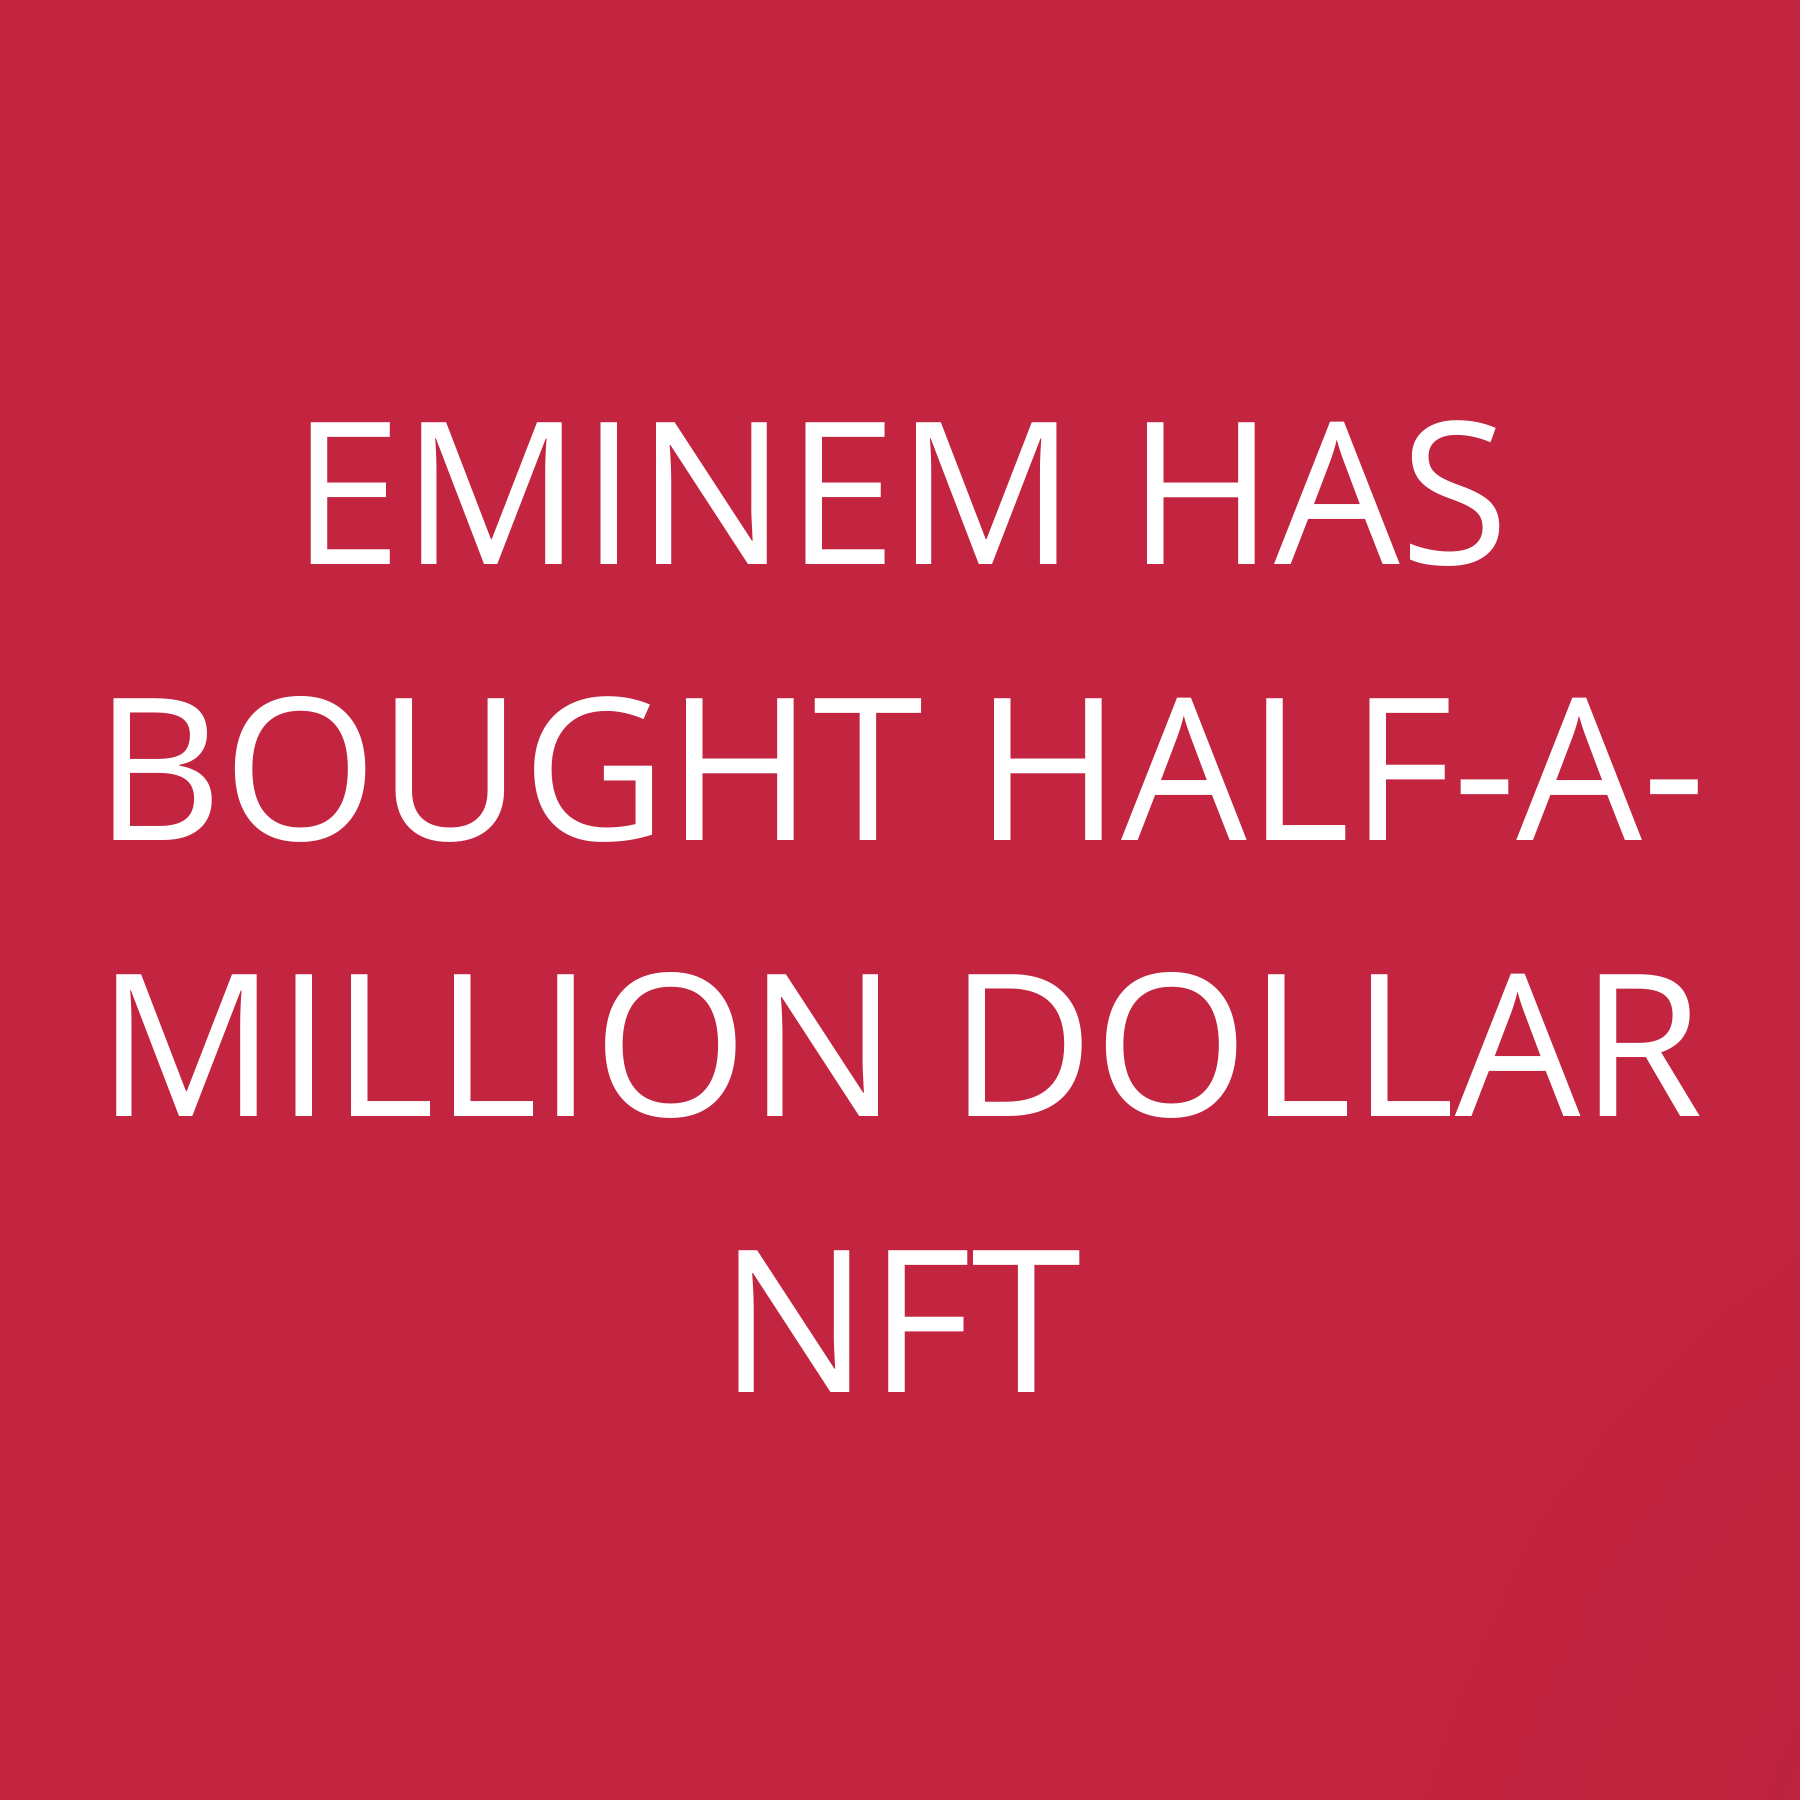 Eminem has bought half-a-million dollar NFT